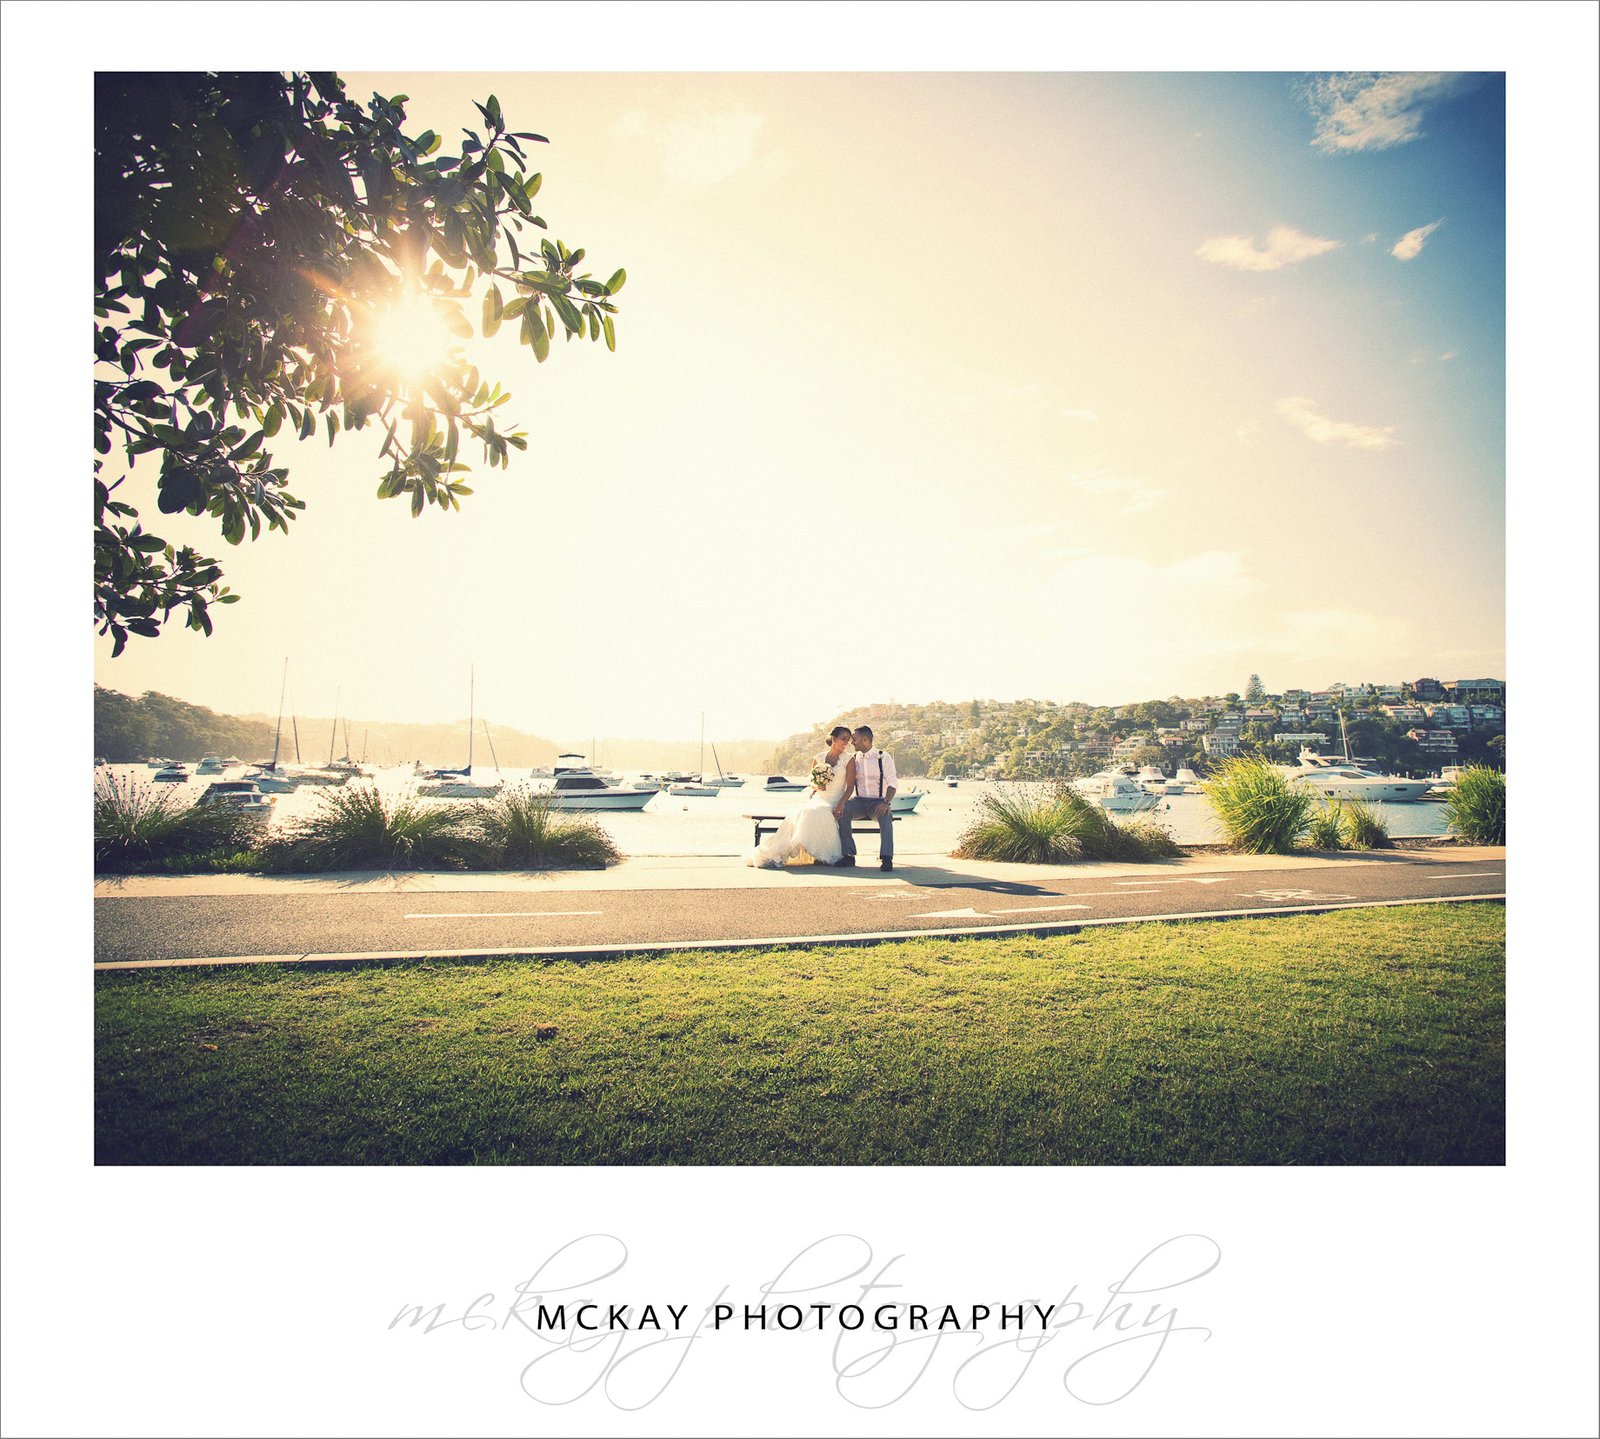 Paige Alex wedding at Zest - McKay Photography